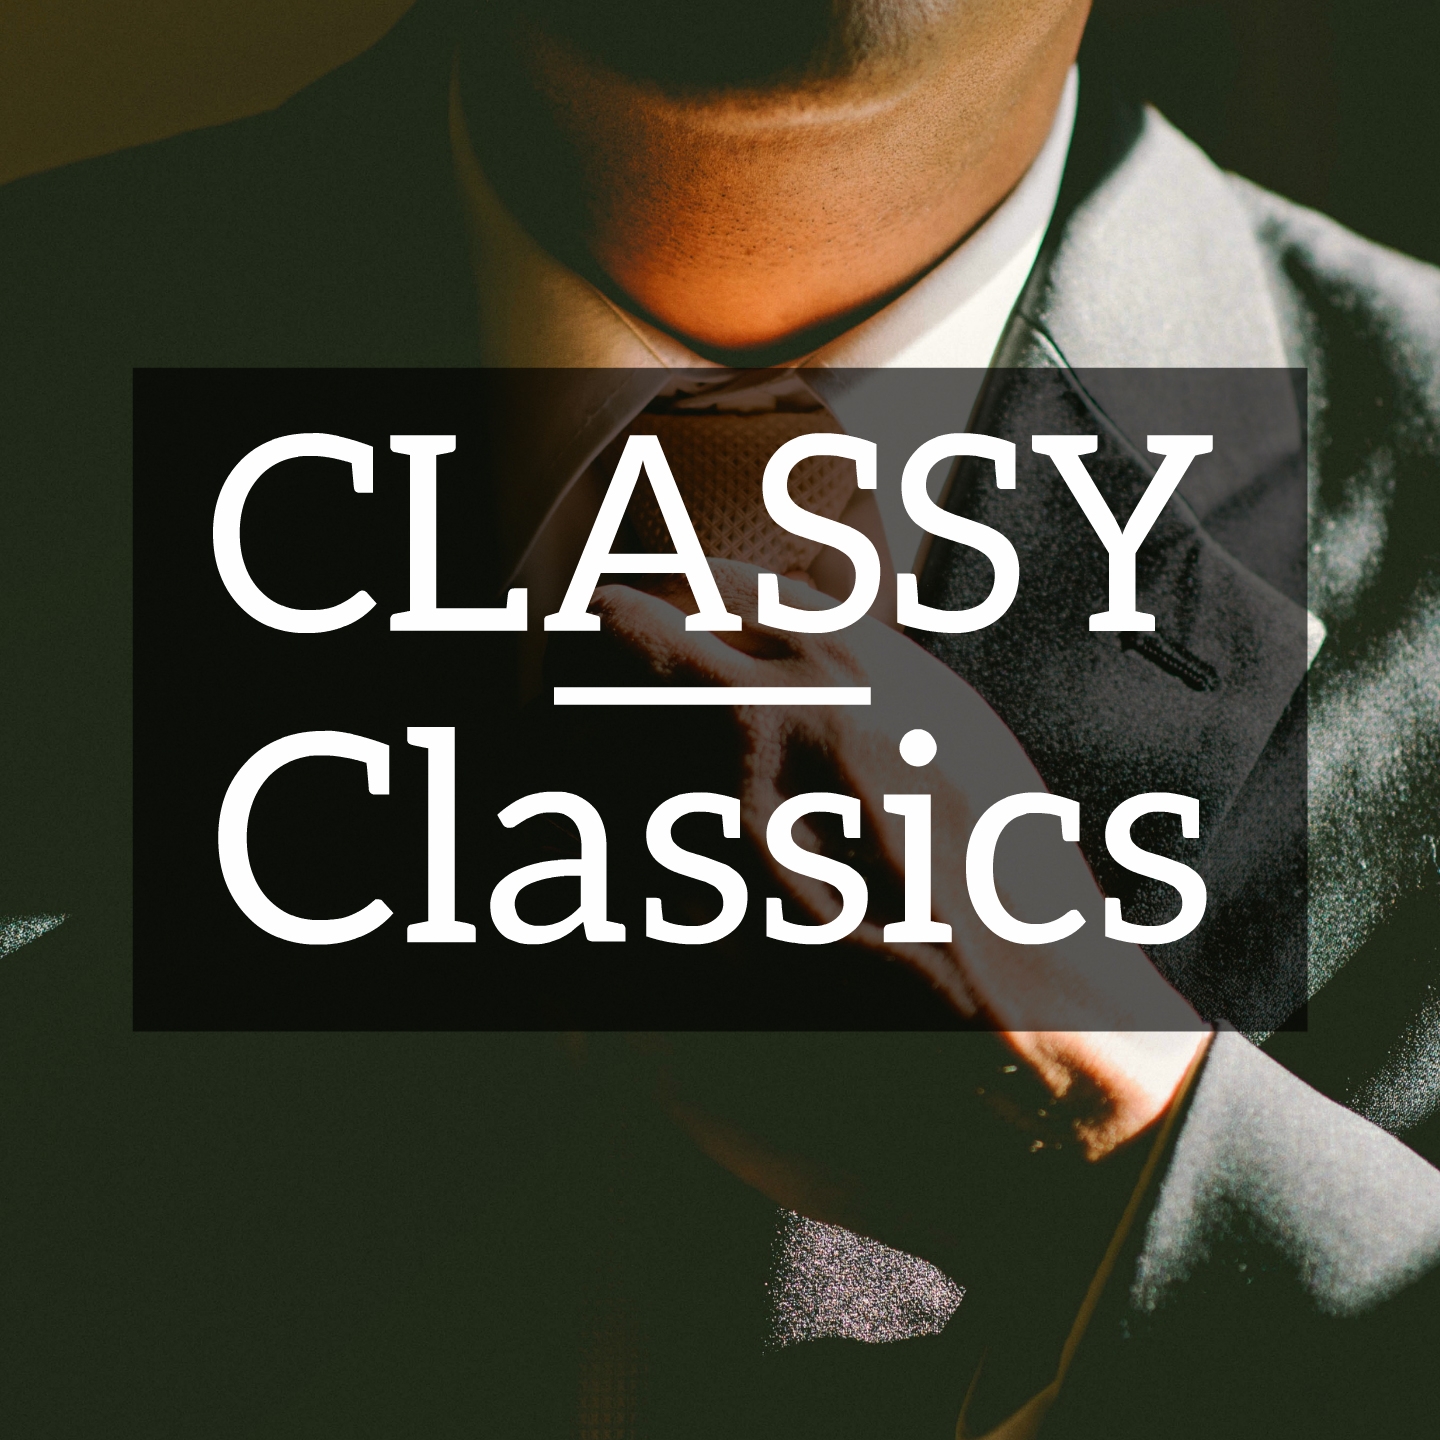 Classy Classics